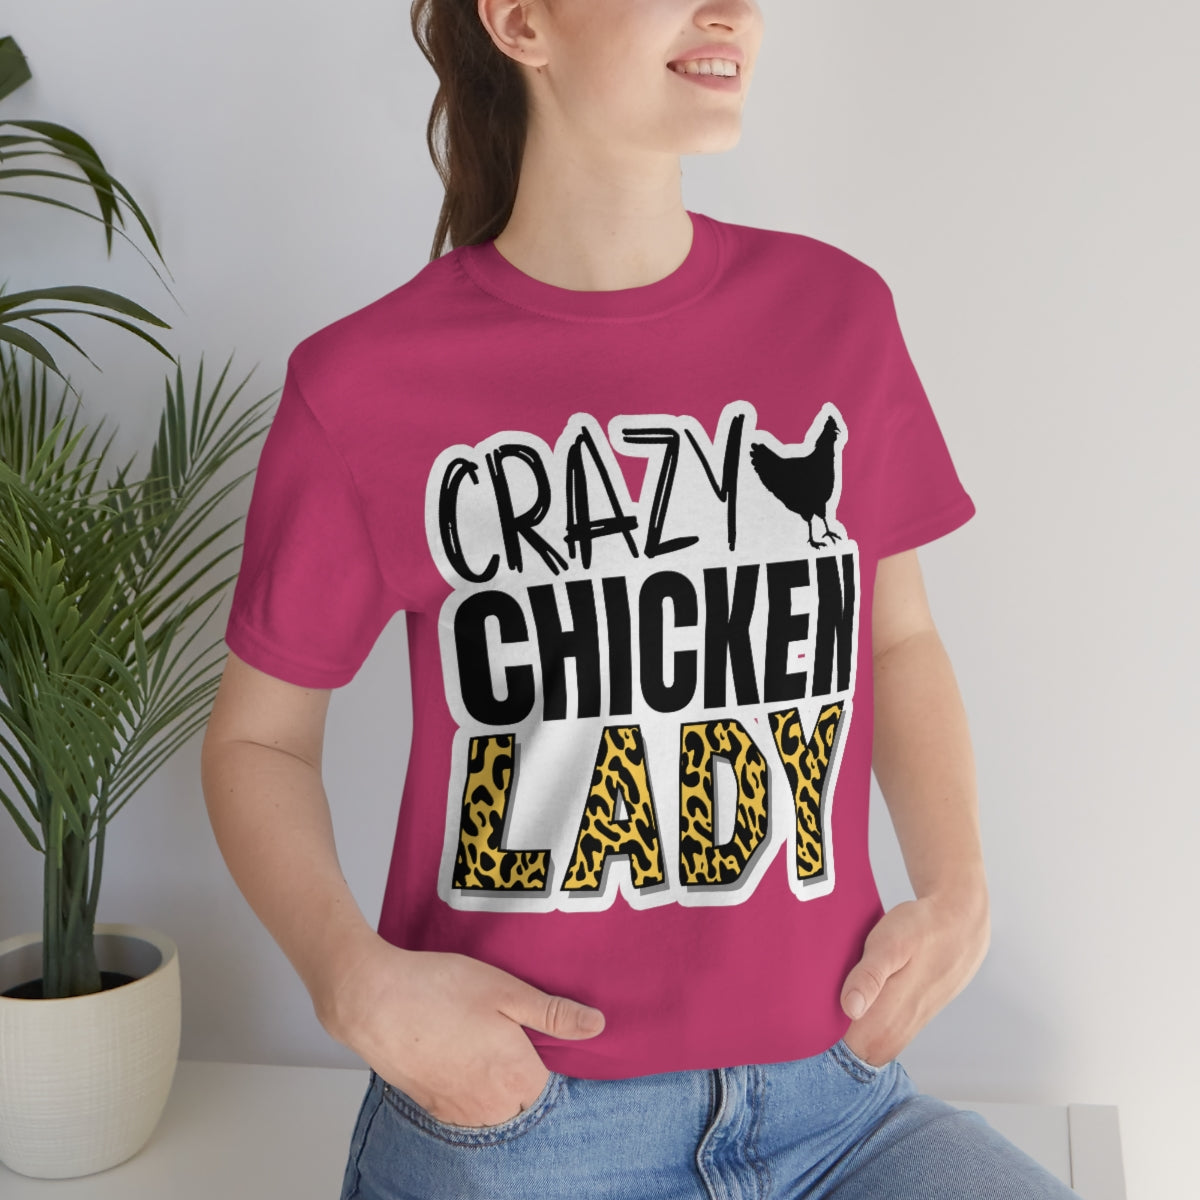 *CRAZY Chicken Lady* Unisex Jersey Short Sleeve Tee